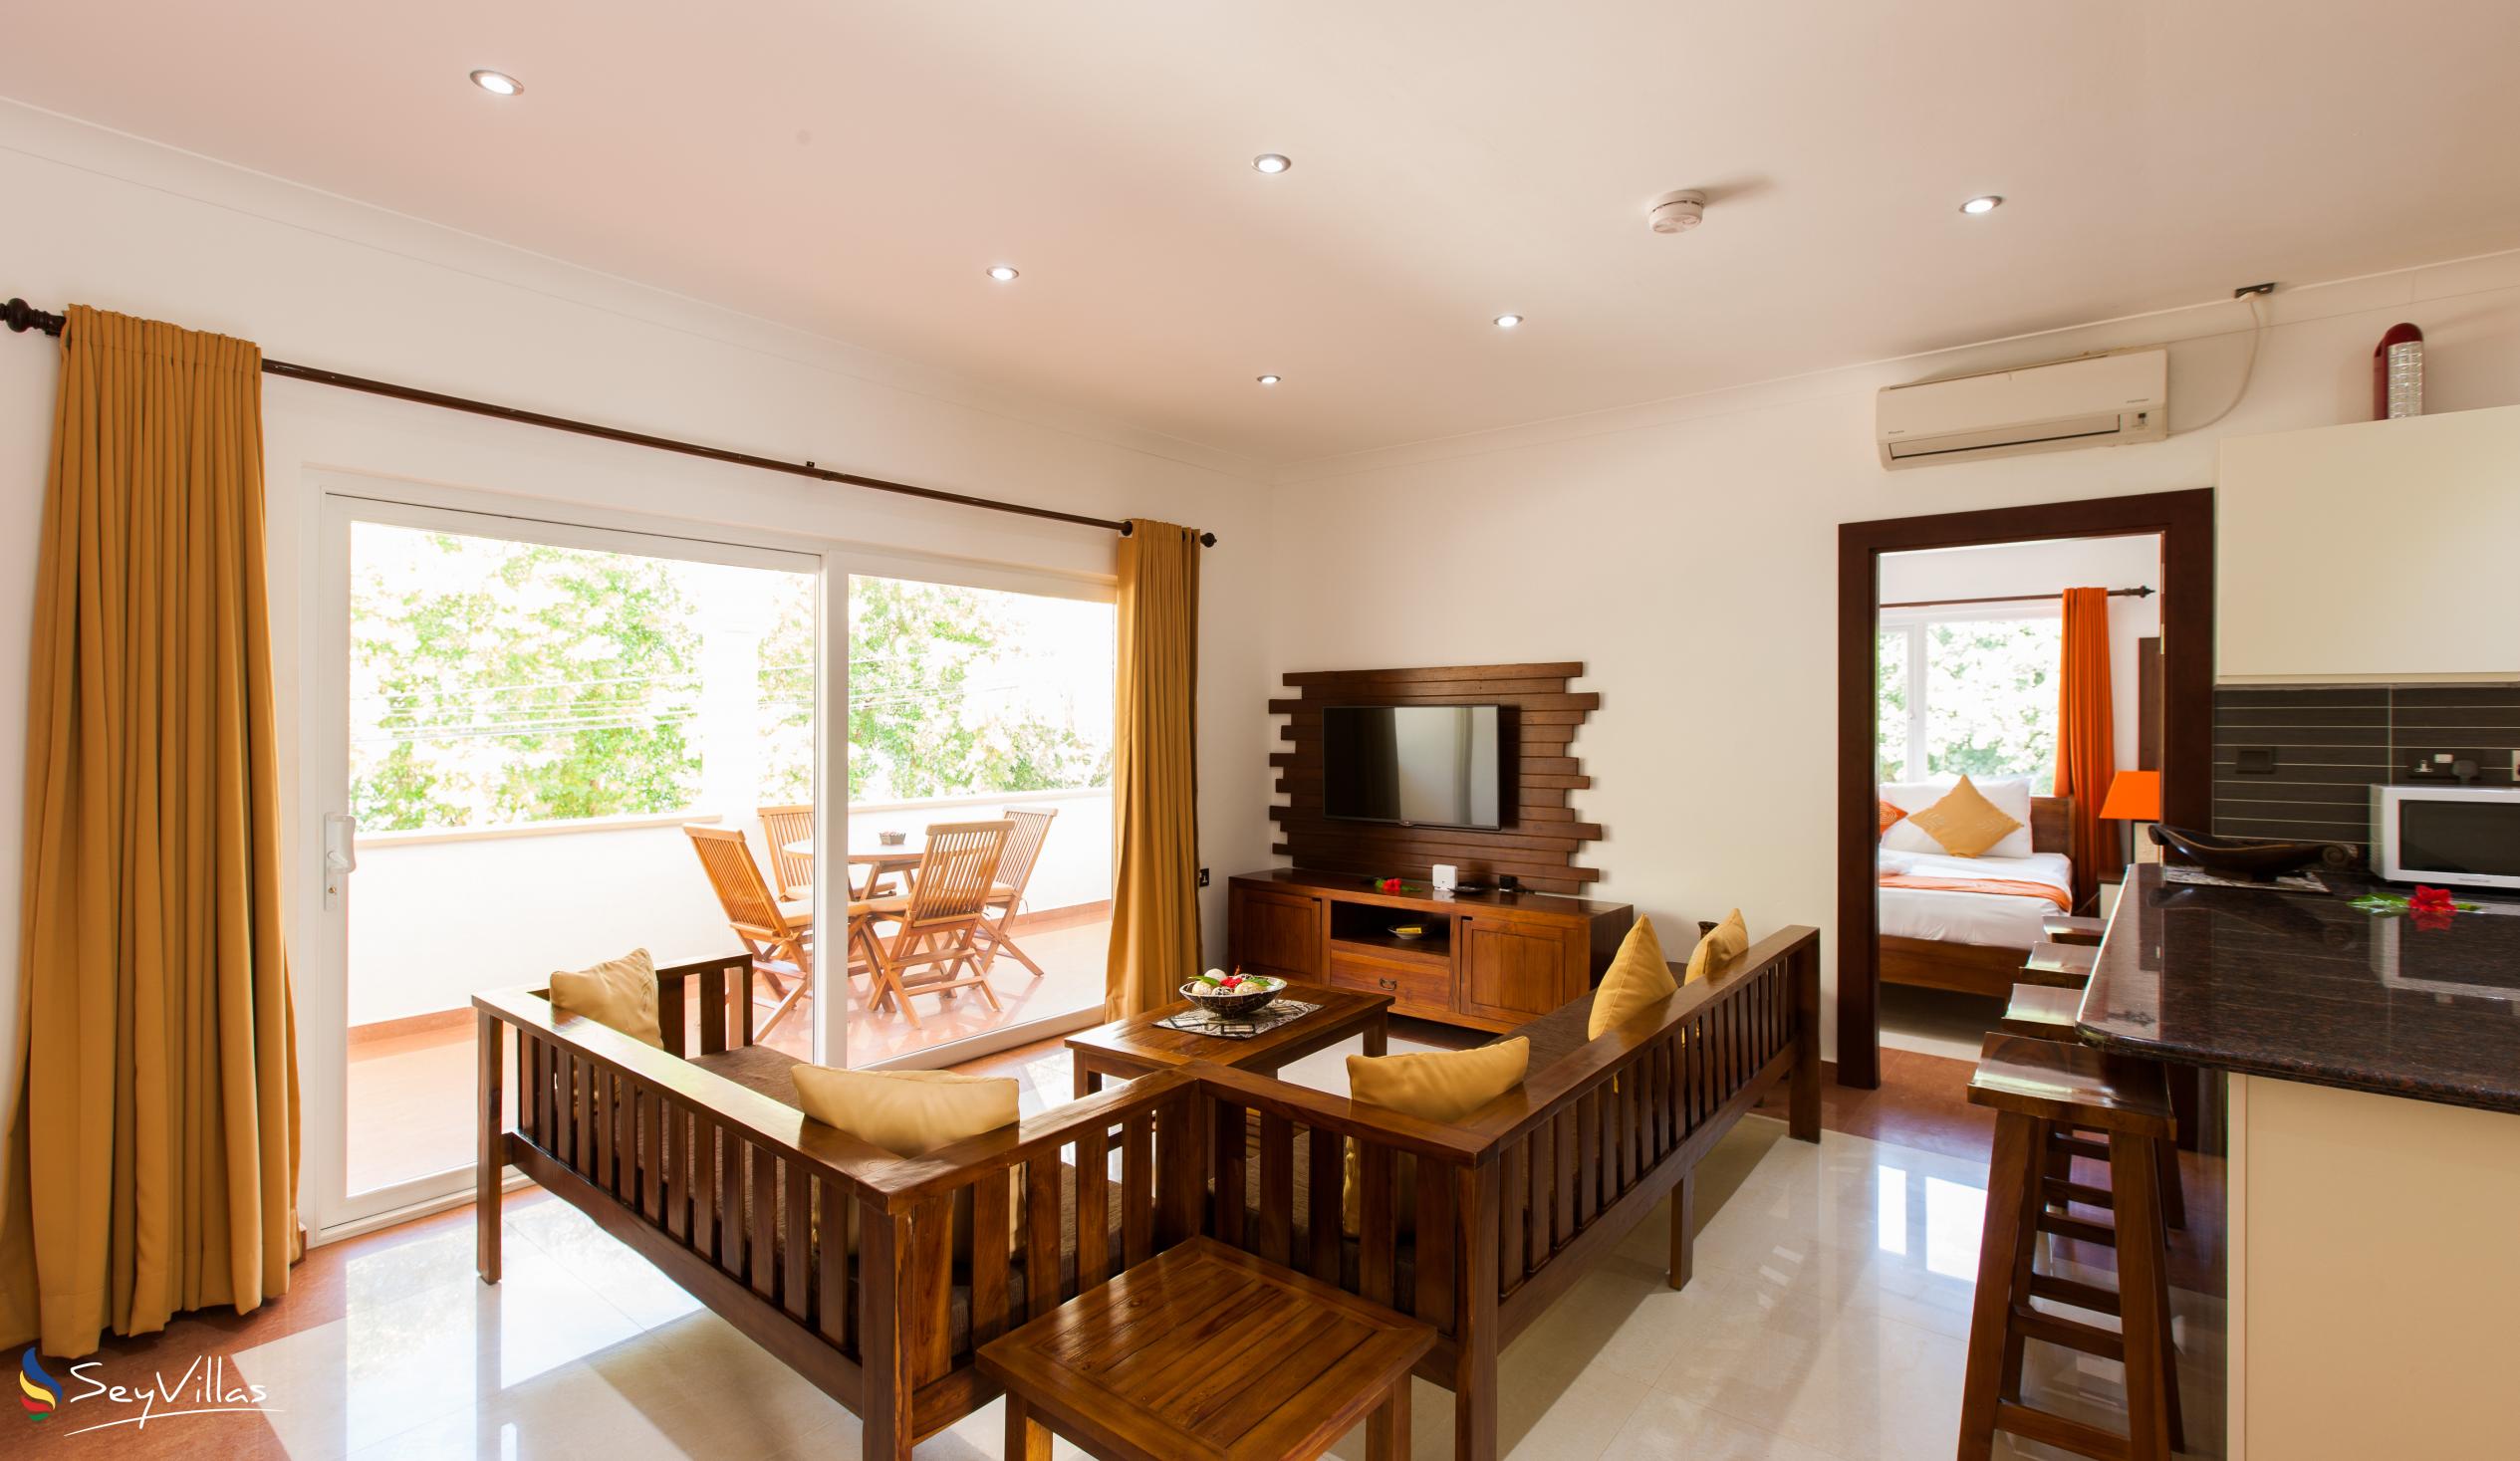 Photo 95: YASAD Luxury Beach Residence - 3-Bedroom Apartment First Floor - Praslin (Seychelles)